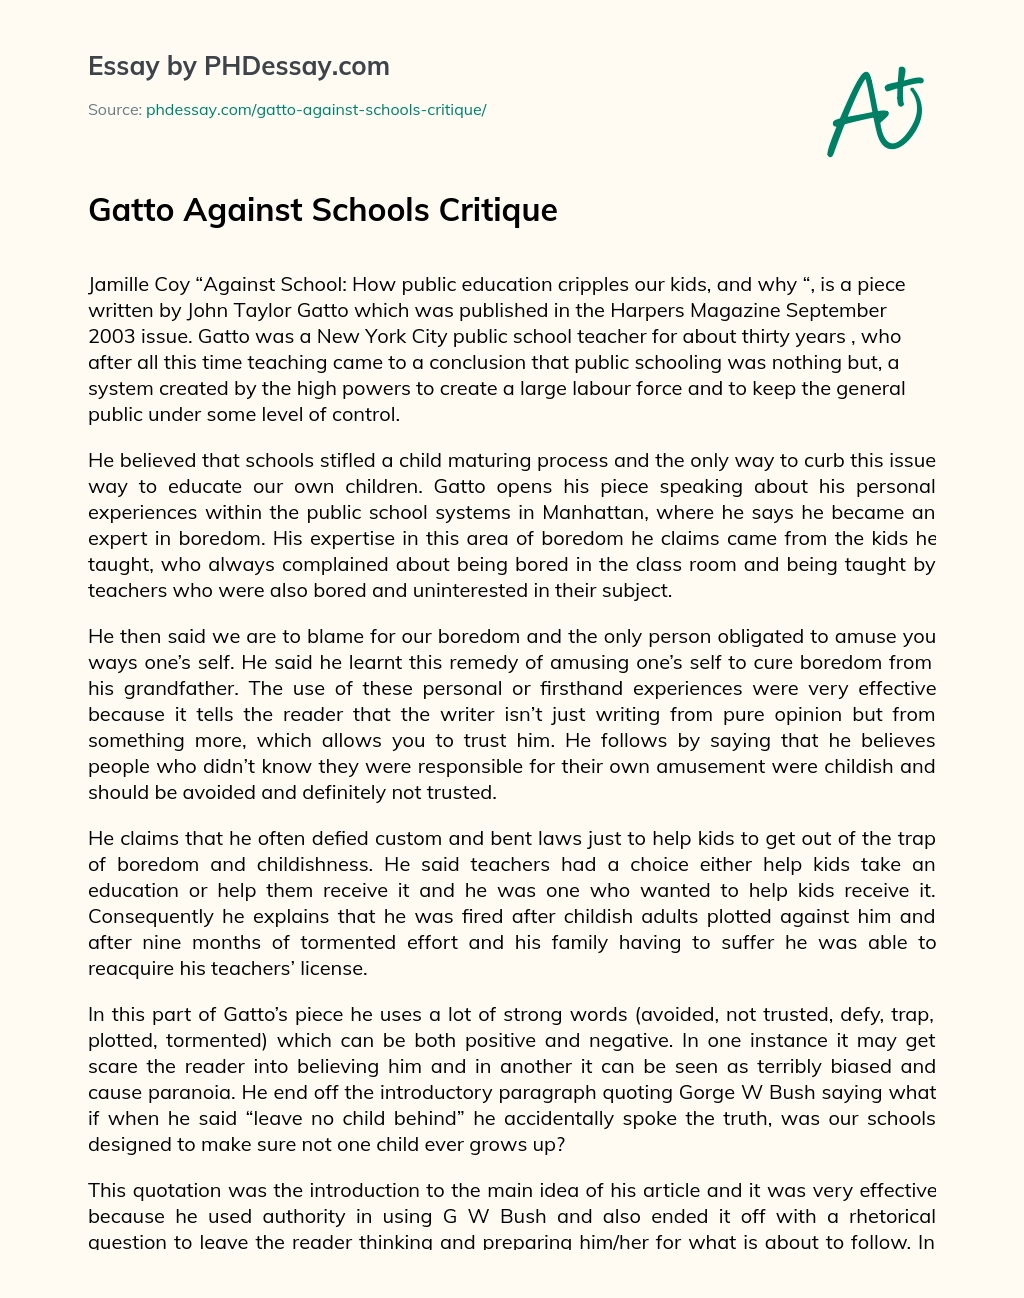 Gatto Against Schools Critique essay